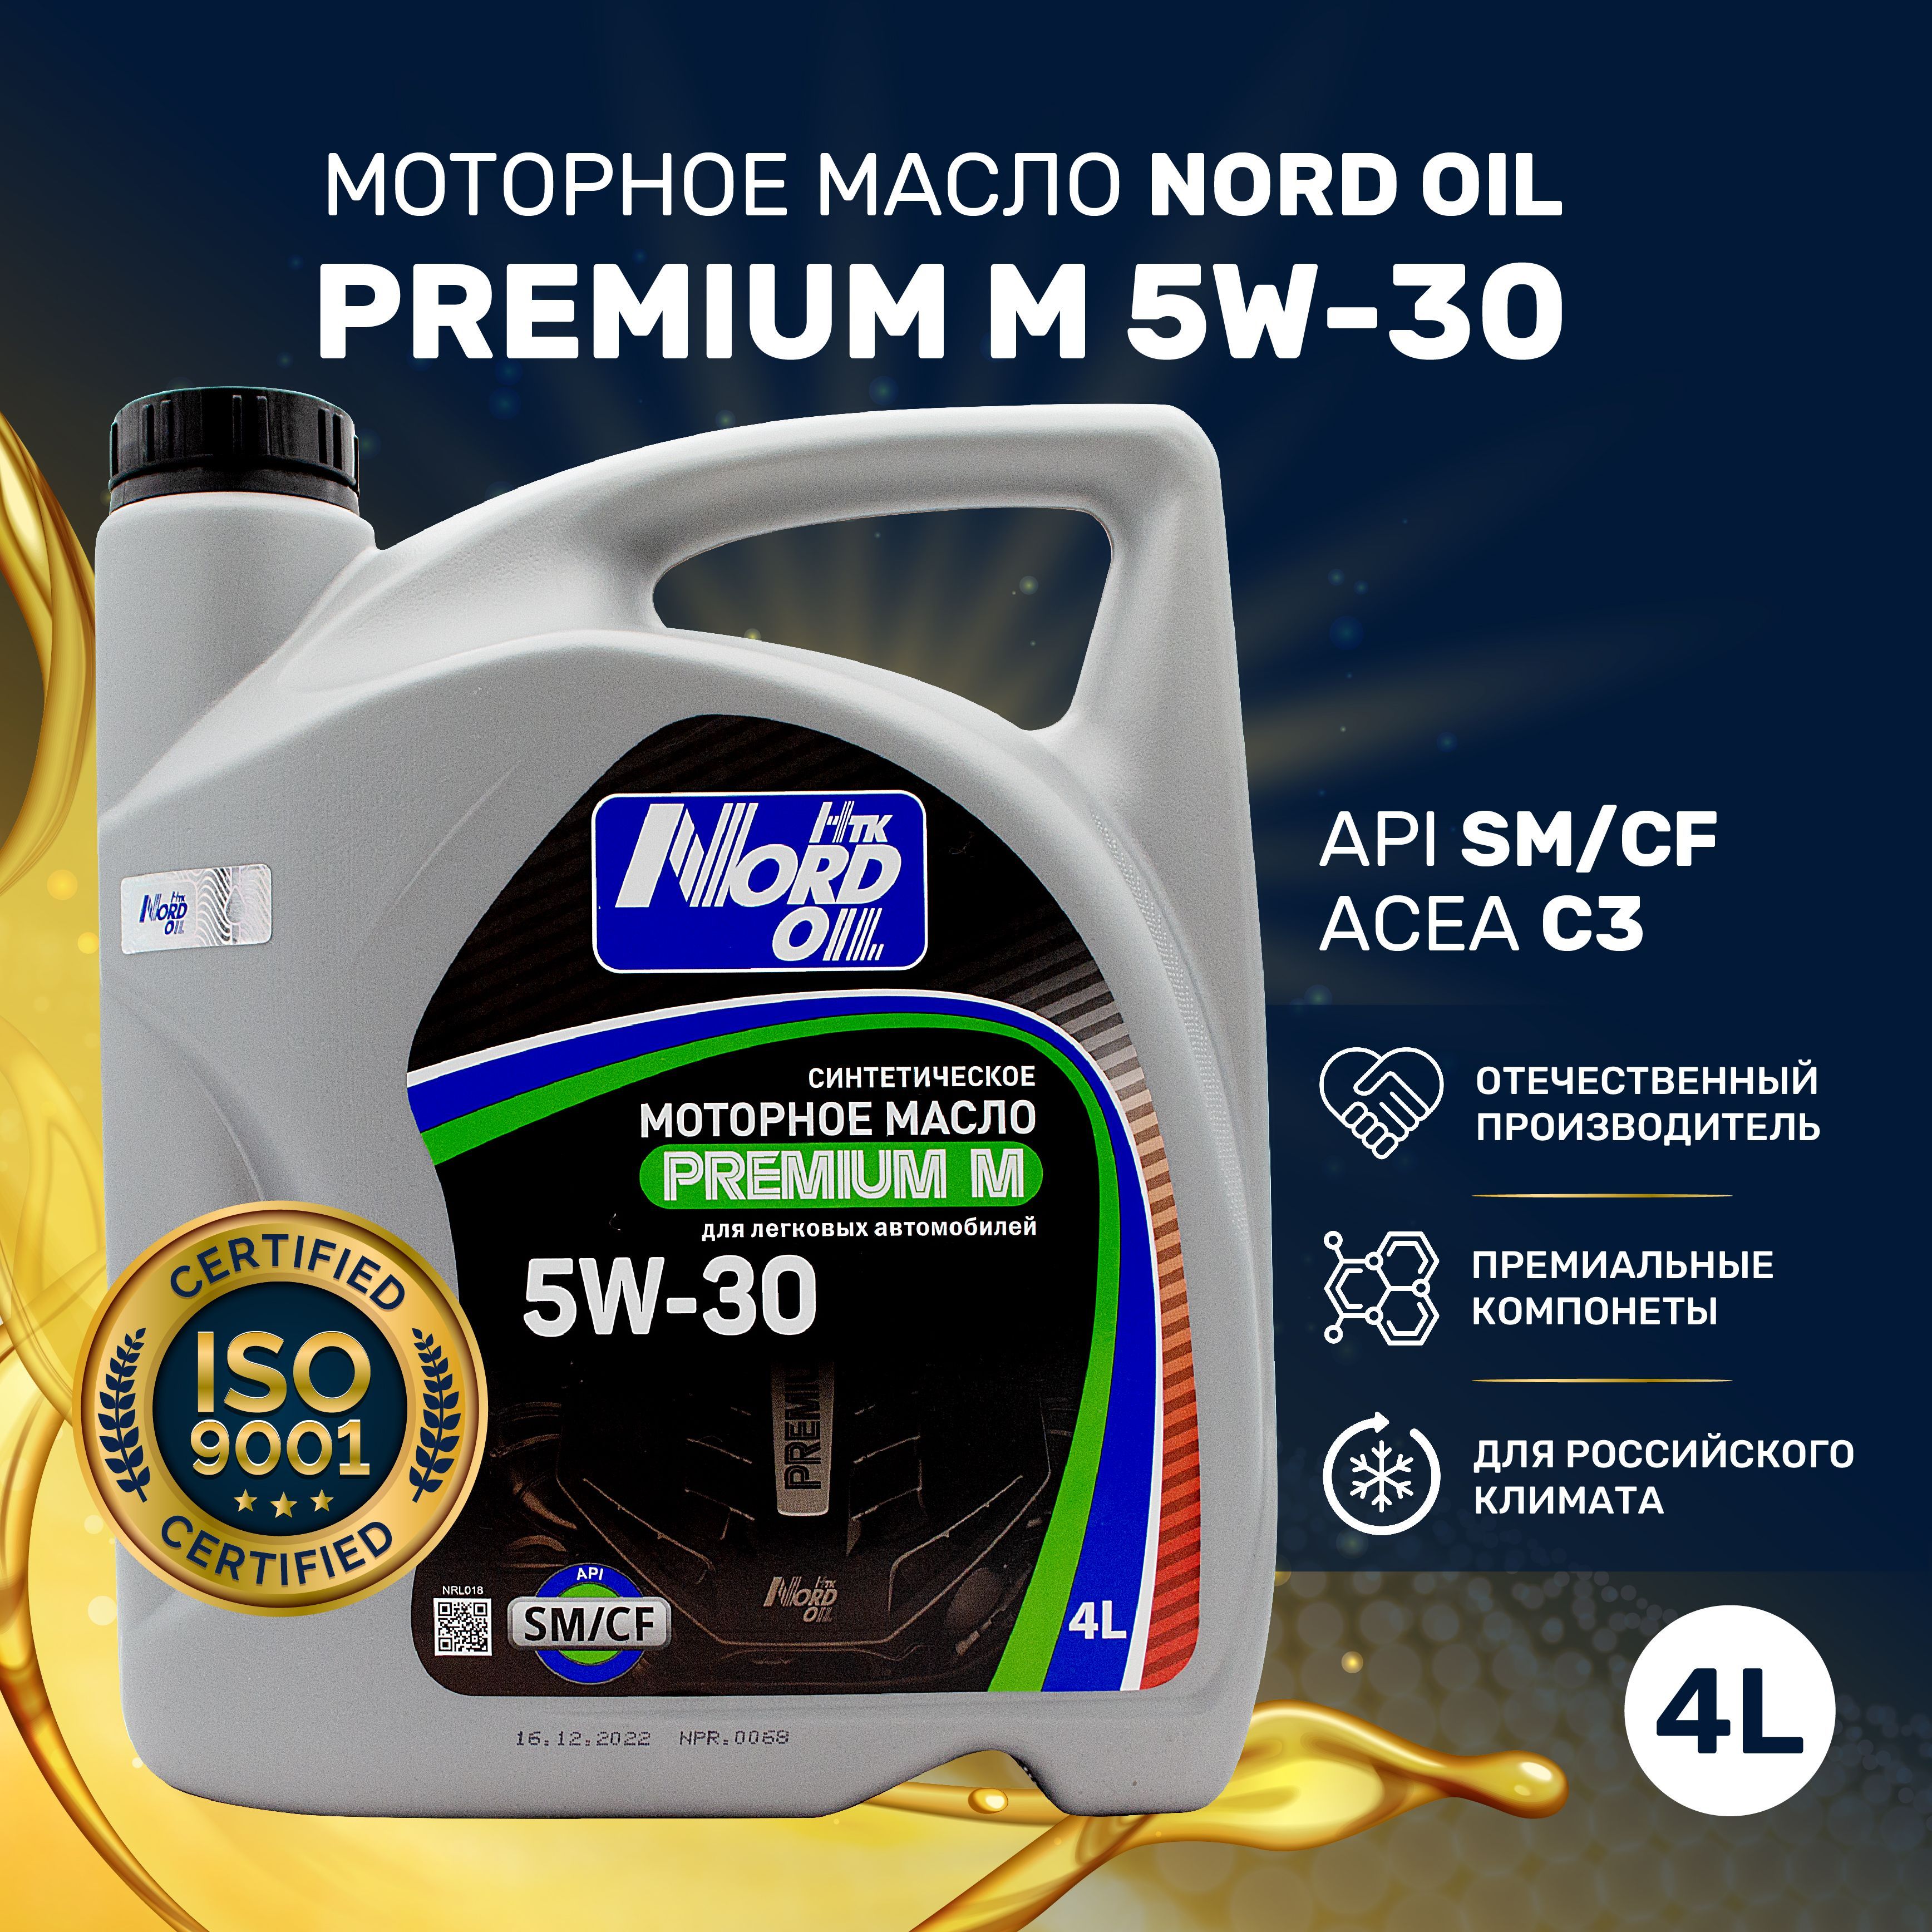 Nord Oil Premium m 5w30. Nord Oil Premium n c3 5w-30 SN/CF. Nord Oil Premium 5 литров. НТК Nord Oil nrt033.